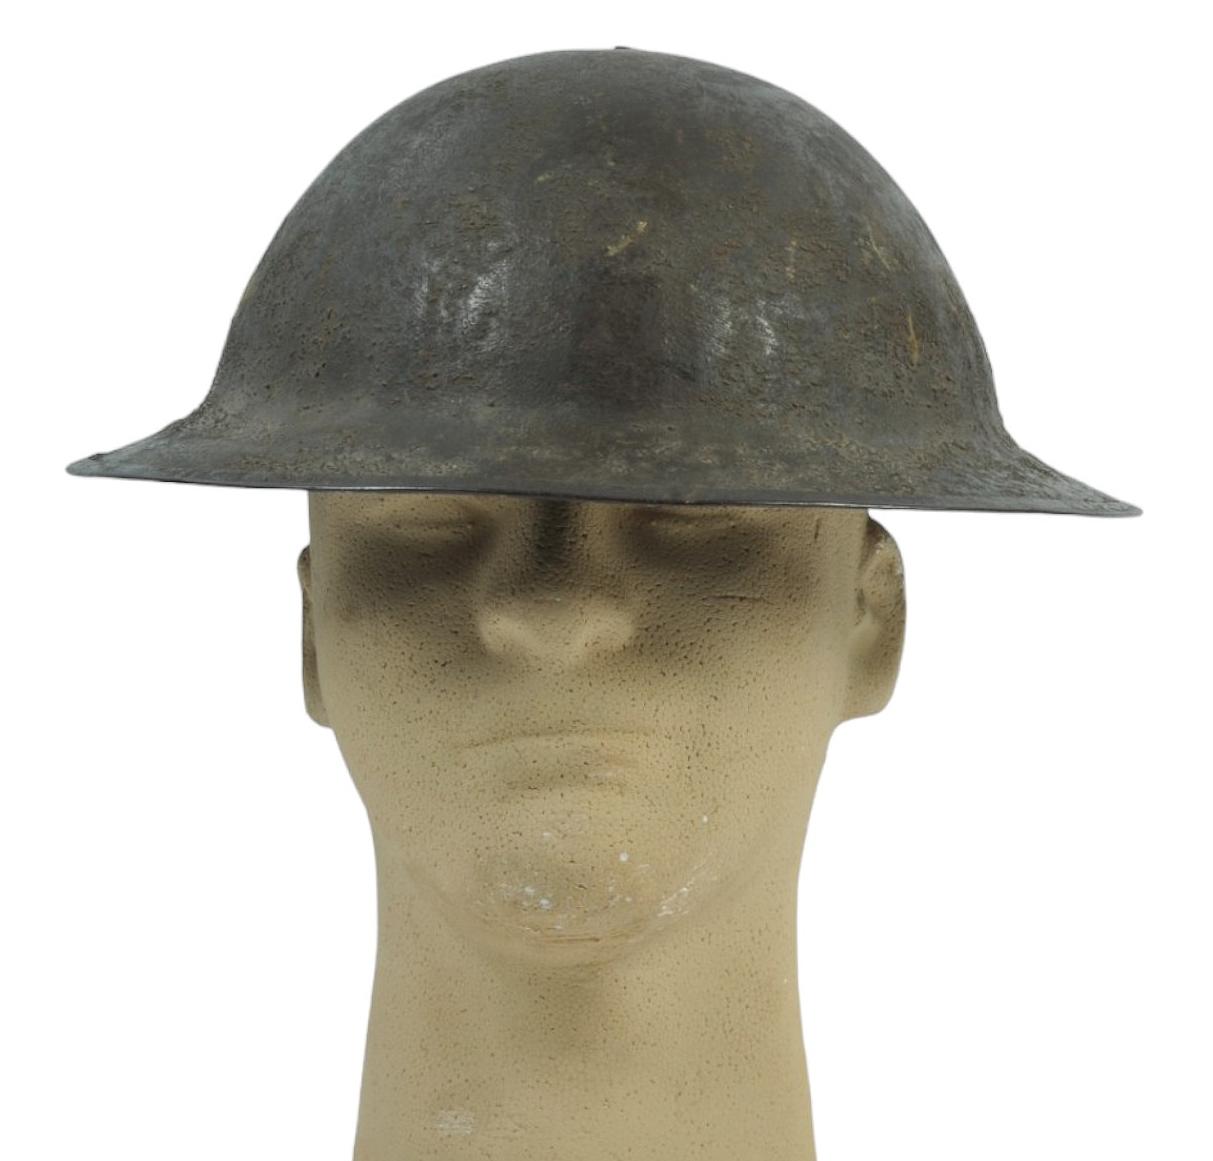 US Military WWI era M1917 Doughboy Helmet  (A)